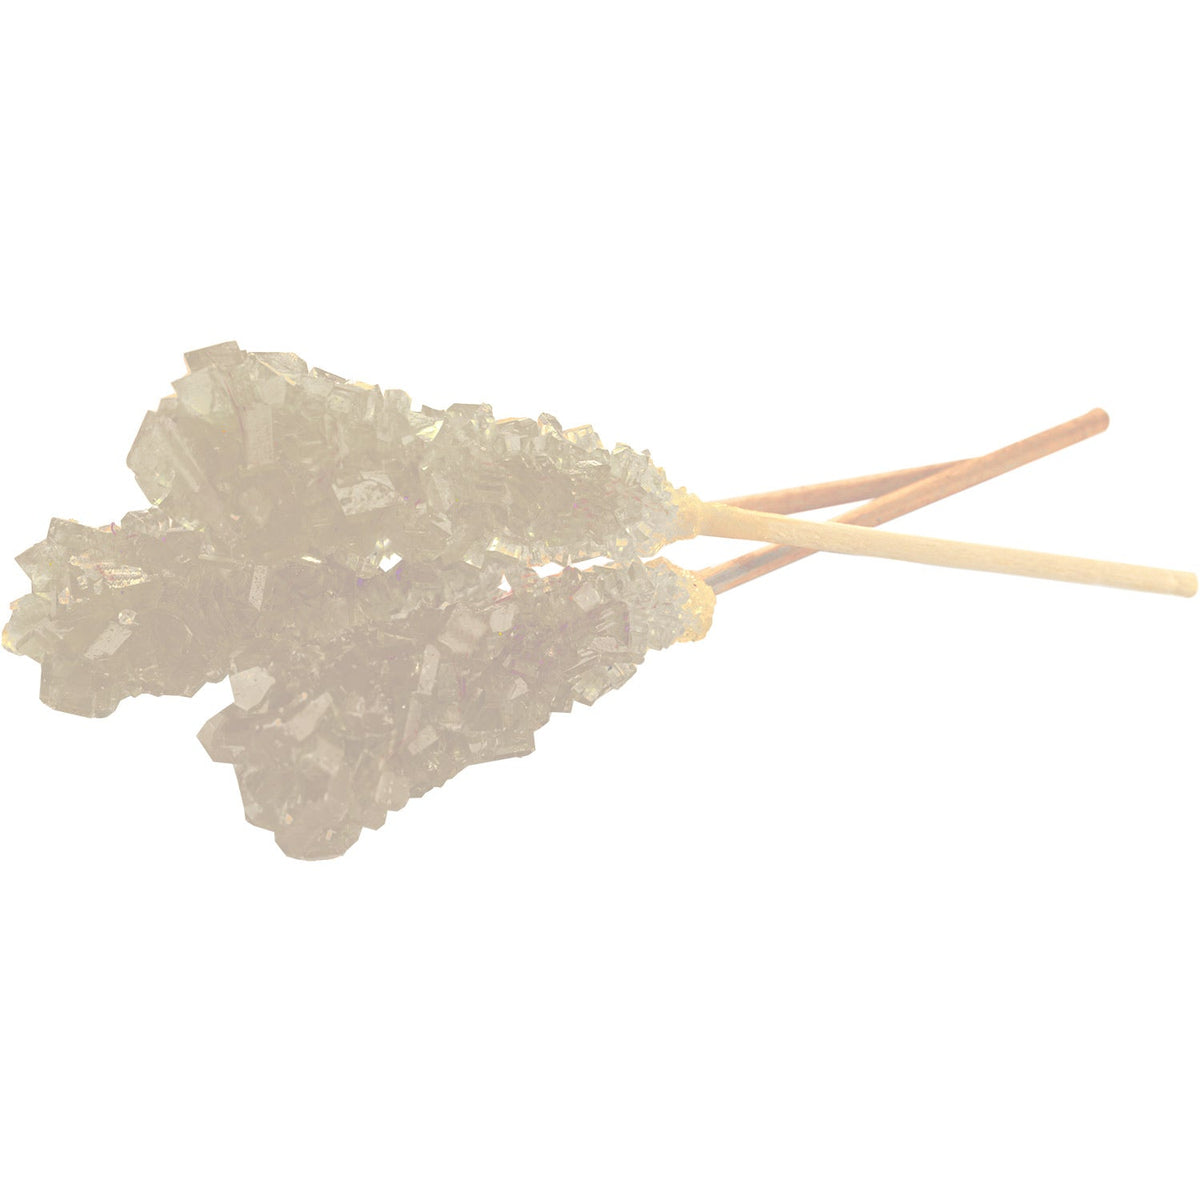 Christal Rock Candy with Stick 400 gr (نبات سفید  با چوب )